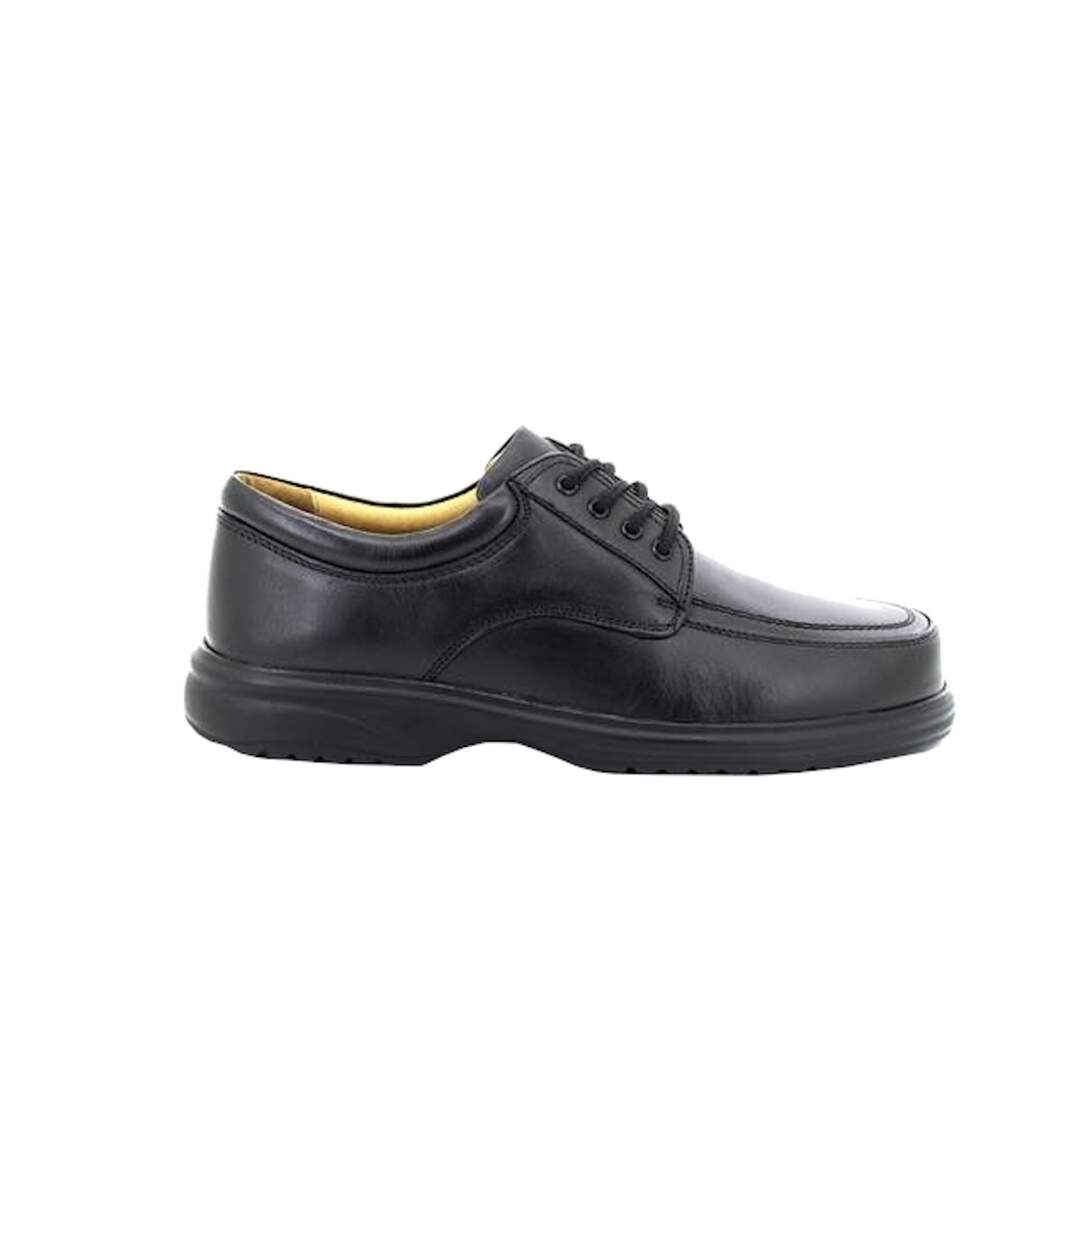 Roamers Superlite - Chaussures de ville en cuir - Homme (Noir) - UTDF120